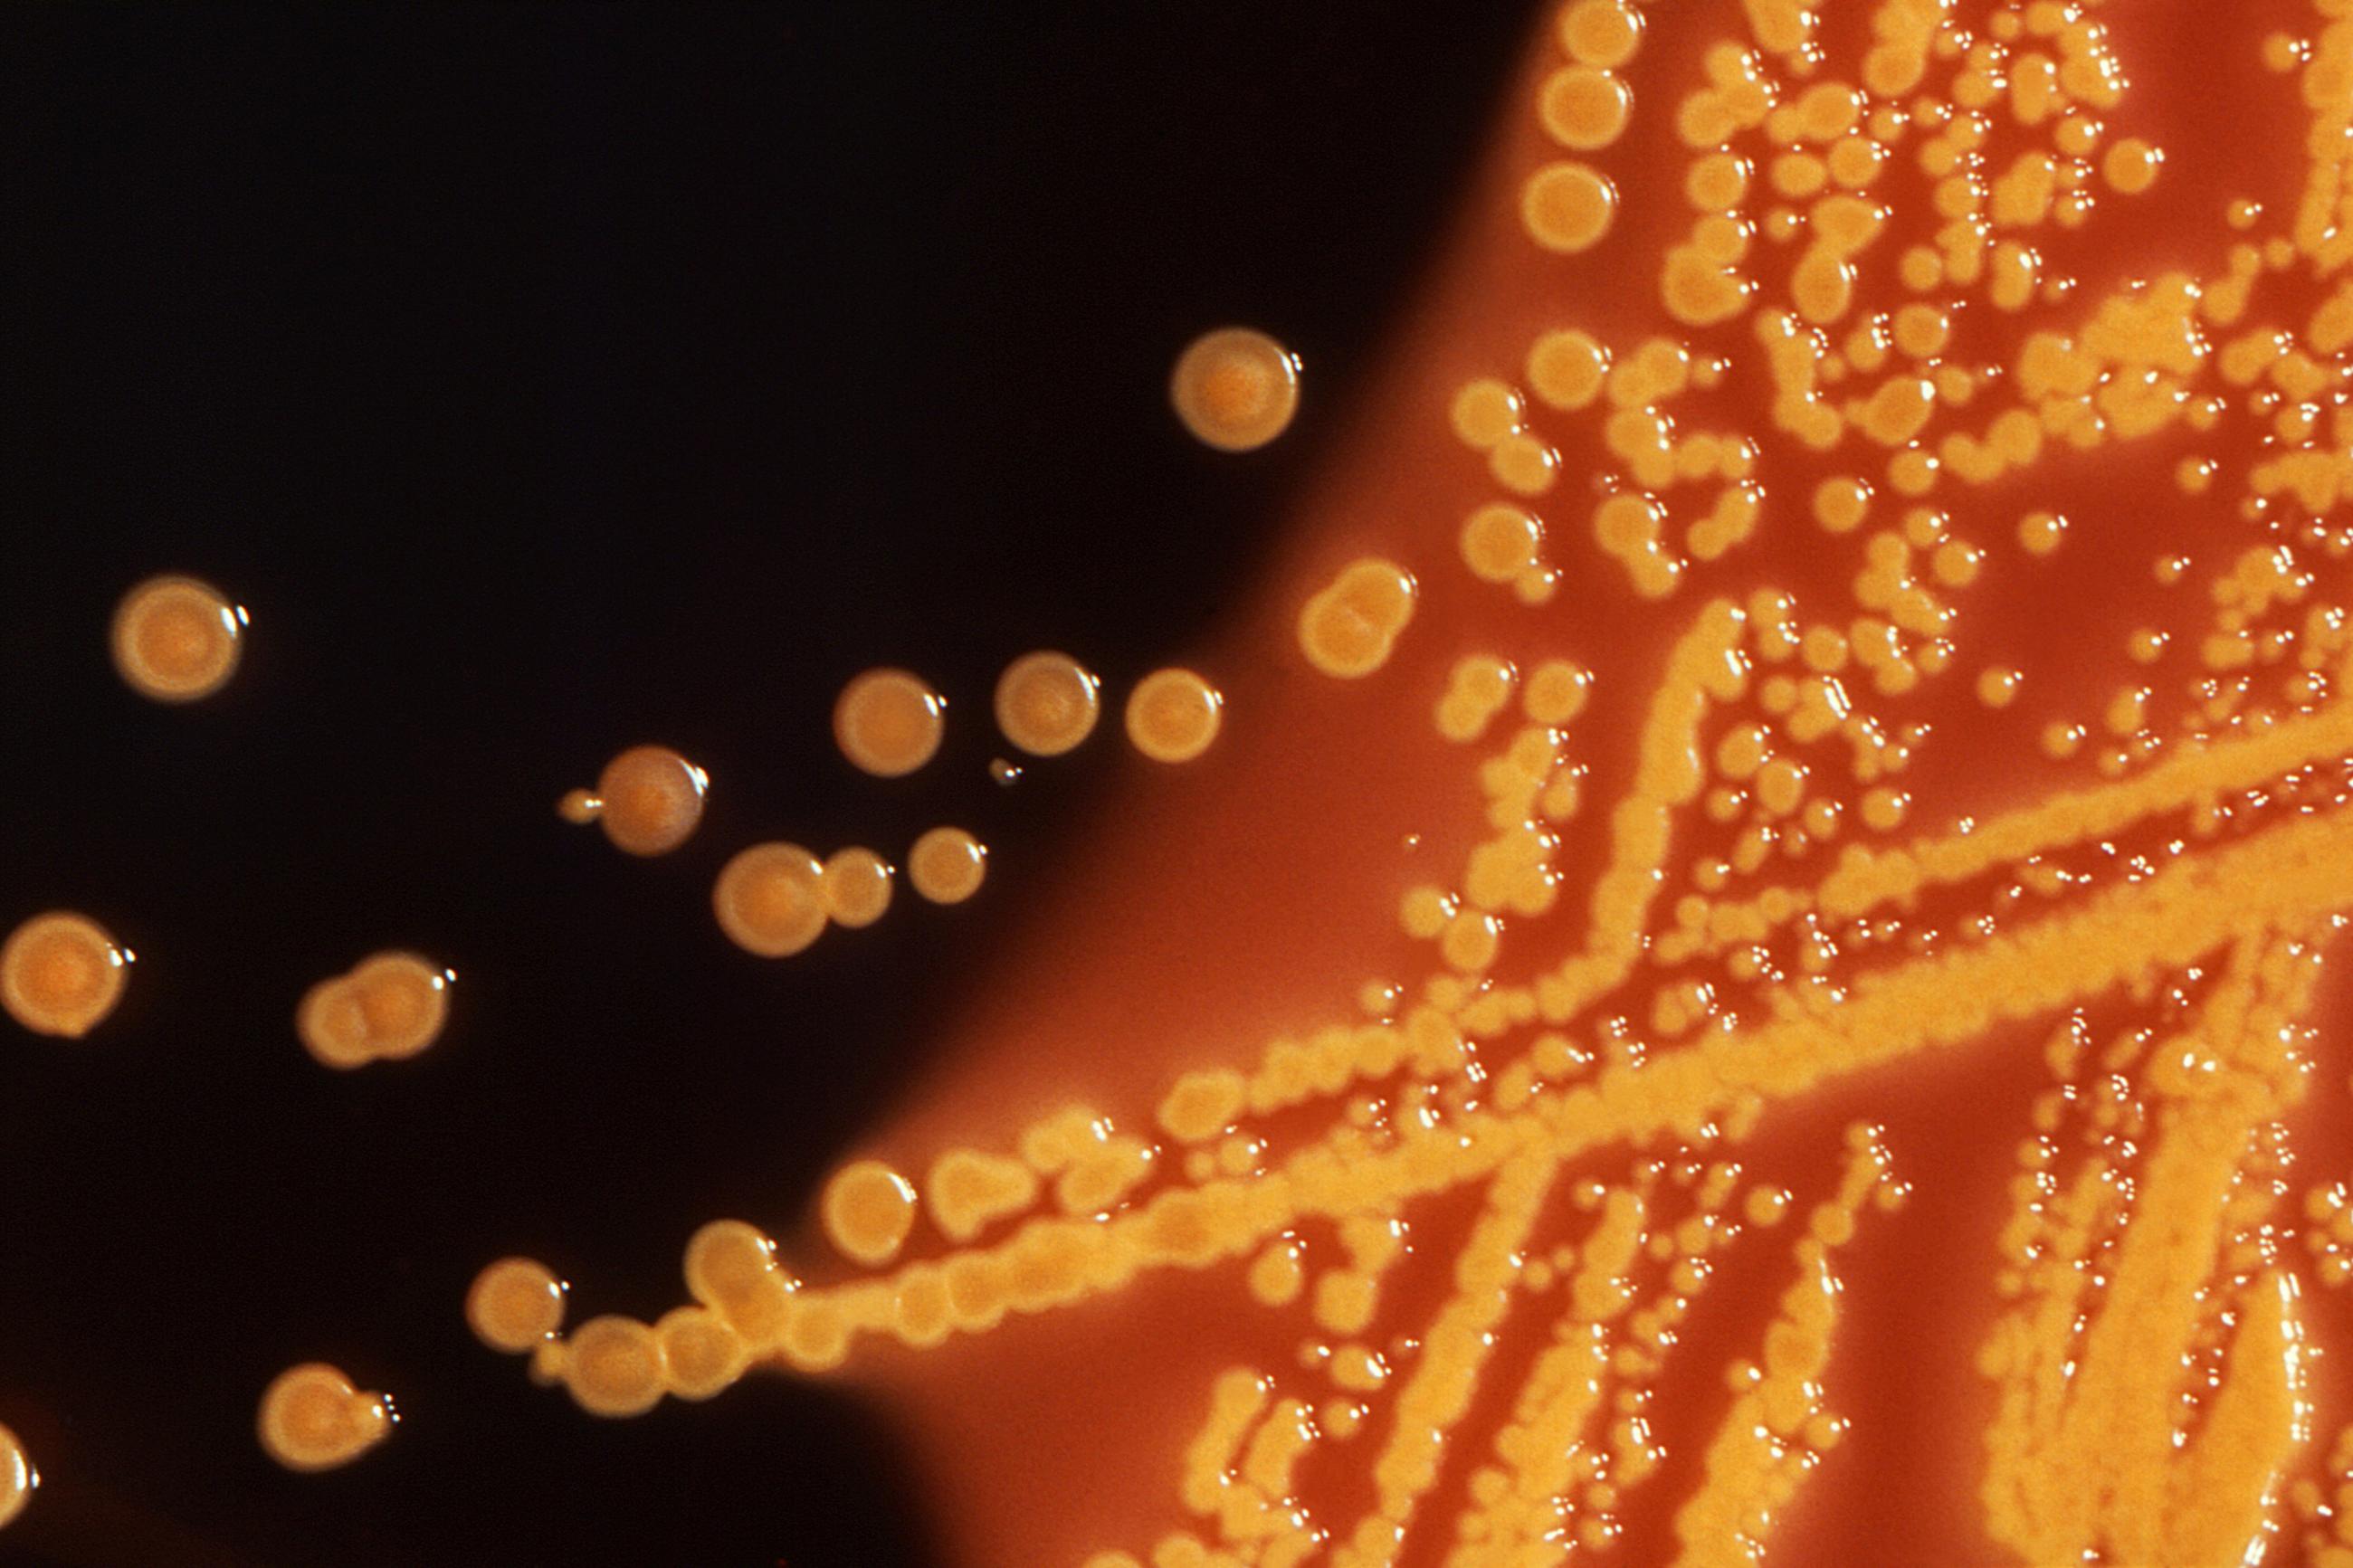 Colonies of E. coli bacteria grown on a Hektoen enteric (HE) agar plate as seen under a microscope.